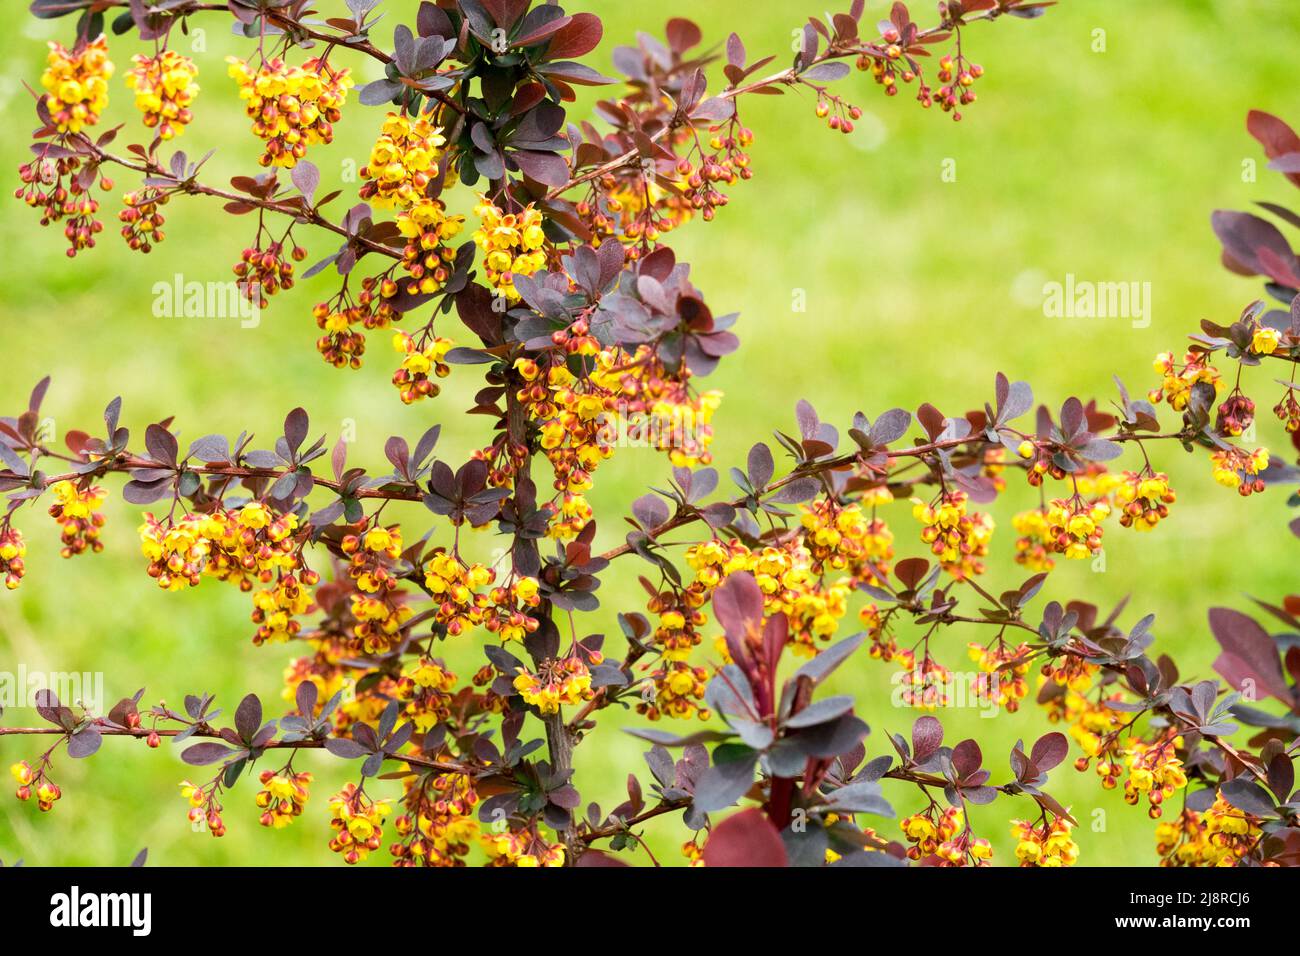 Berberis x ottawensis 'Superba' Japanese barbery flowering shrub in spring Stock Photo